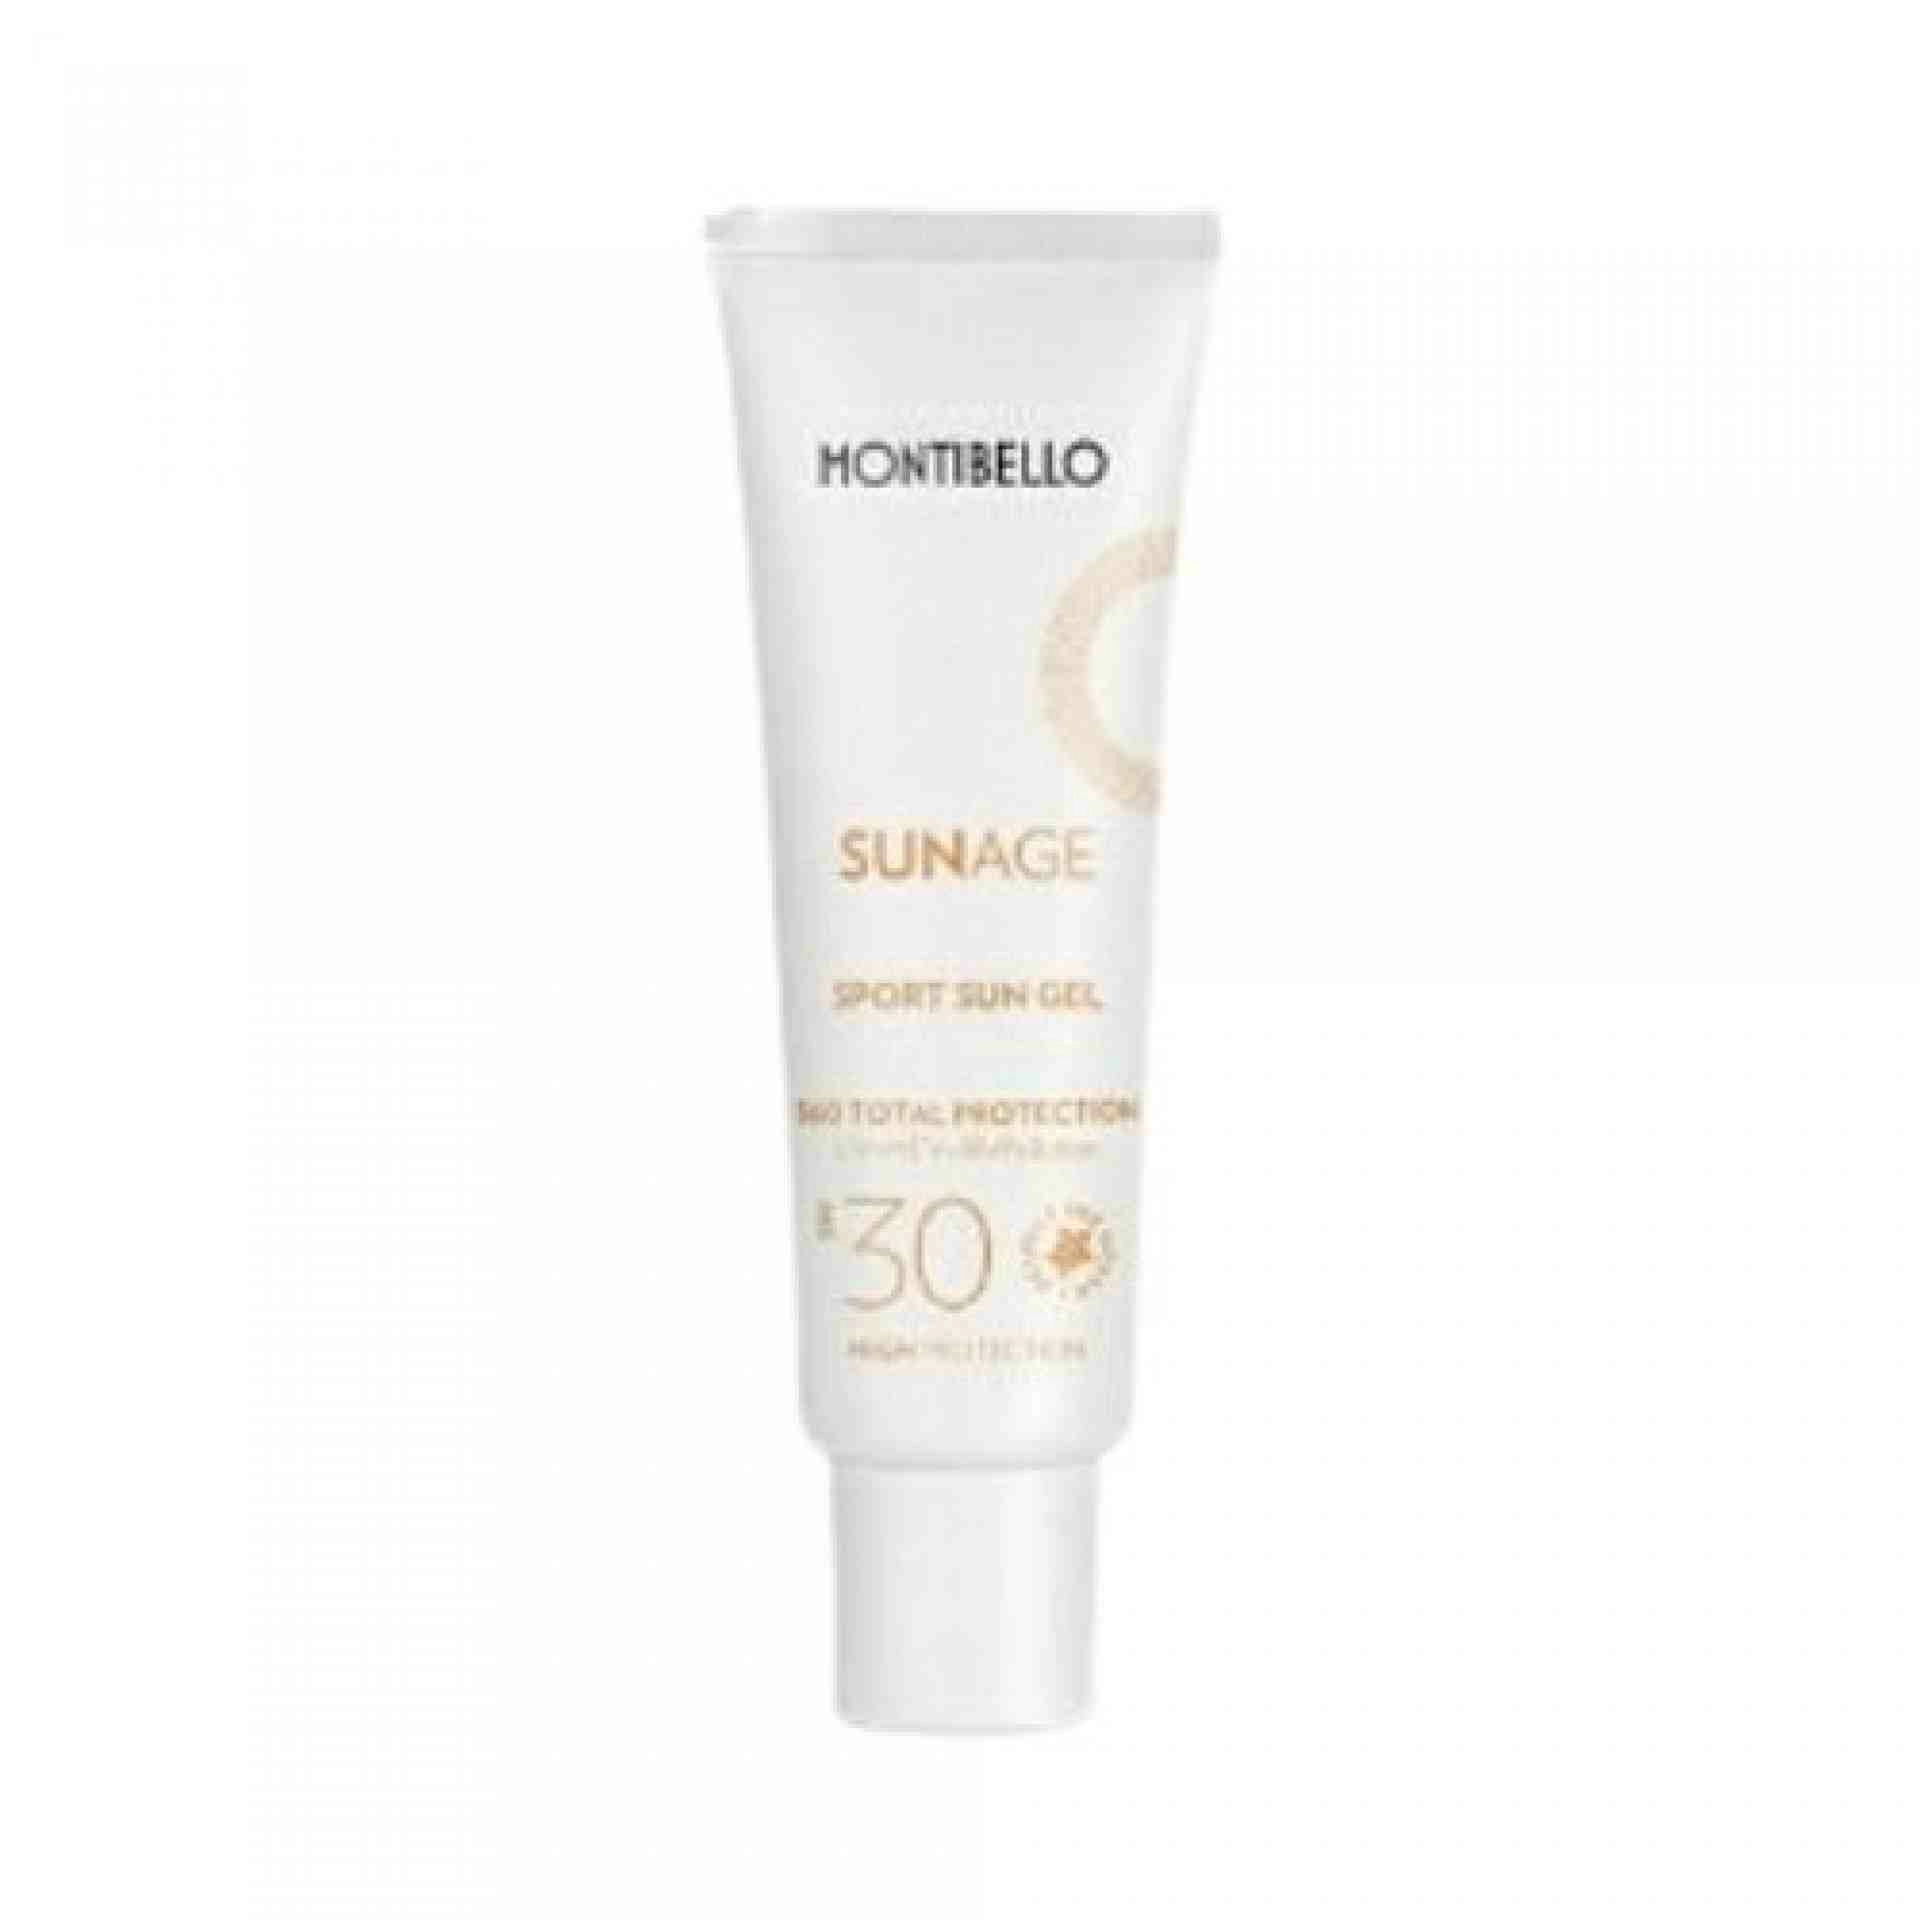 Sport Gel SPF30 | Gel Fotoprotector Facial 50ml - Sun Age - Montibello ®